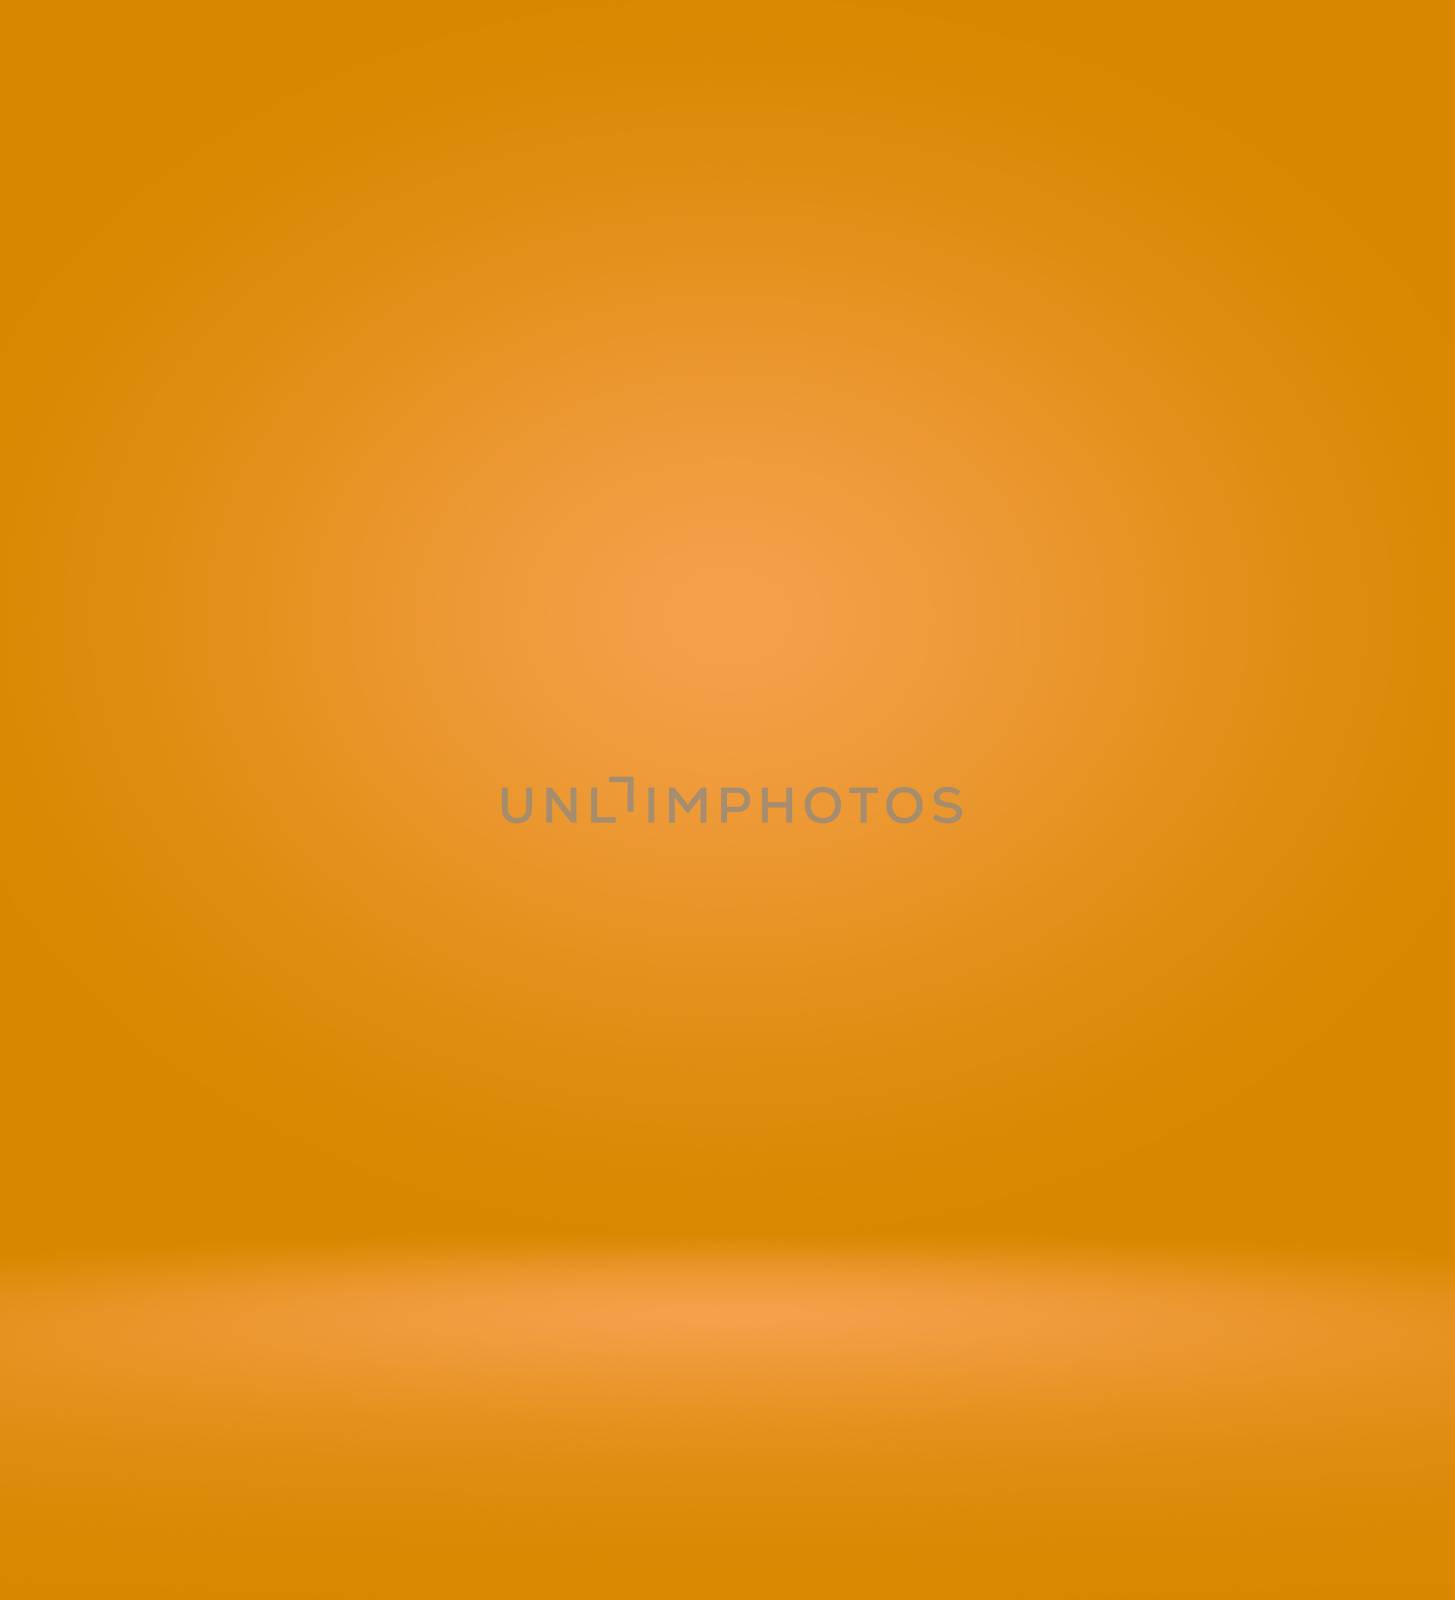 Orange photographic studio background vertical with soft vignette. Soft gradient background. Painted canvas studio backdrop